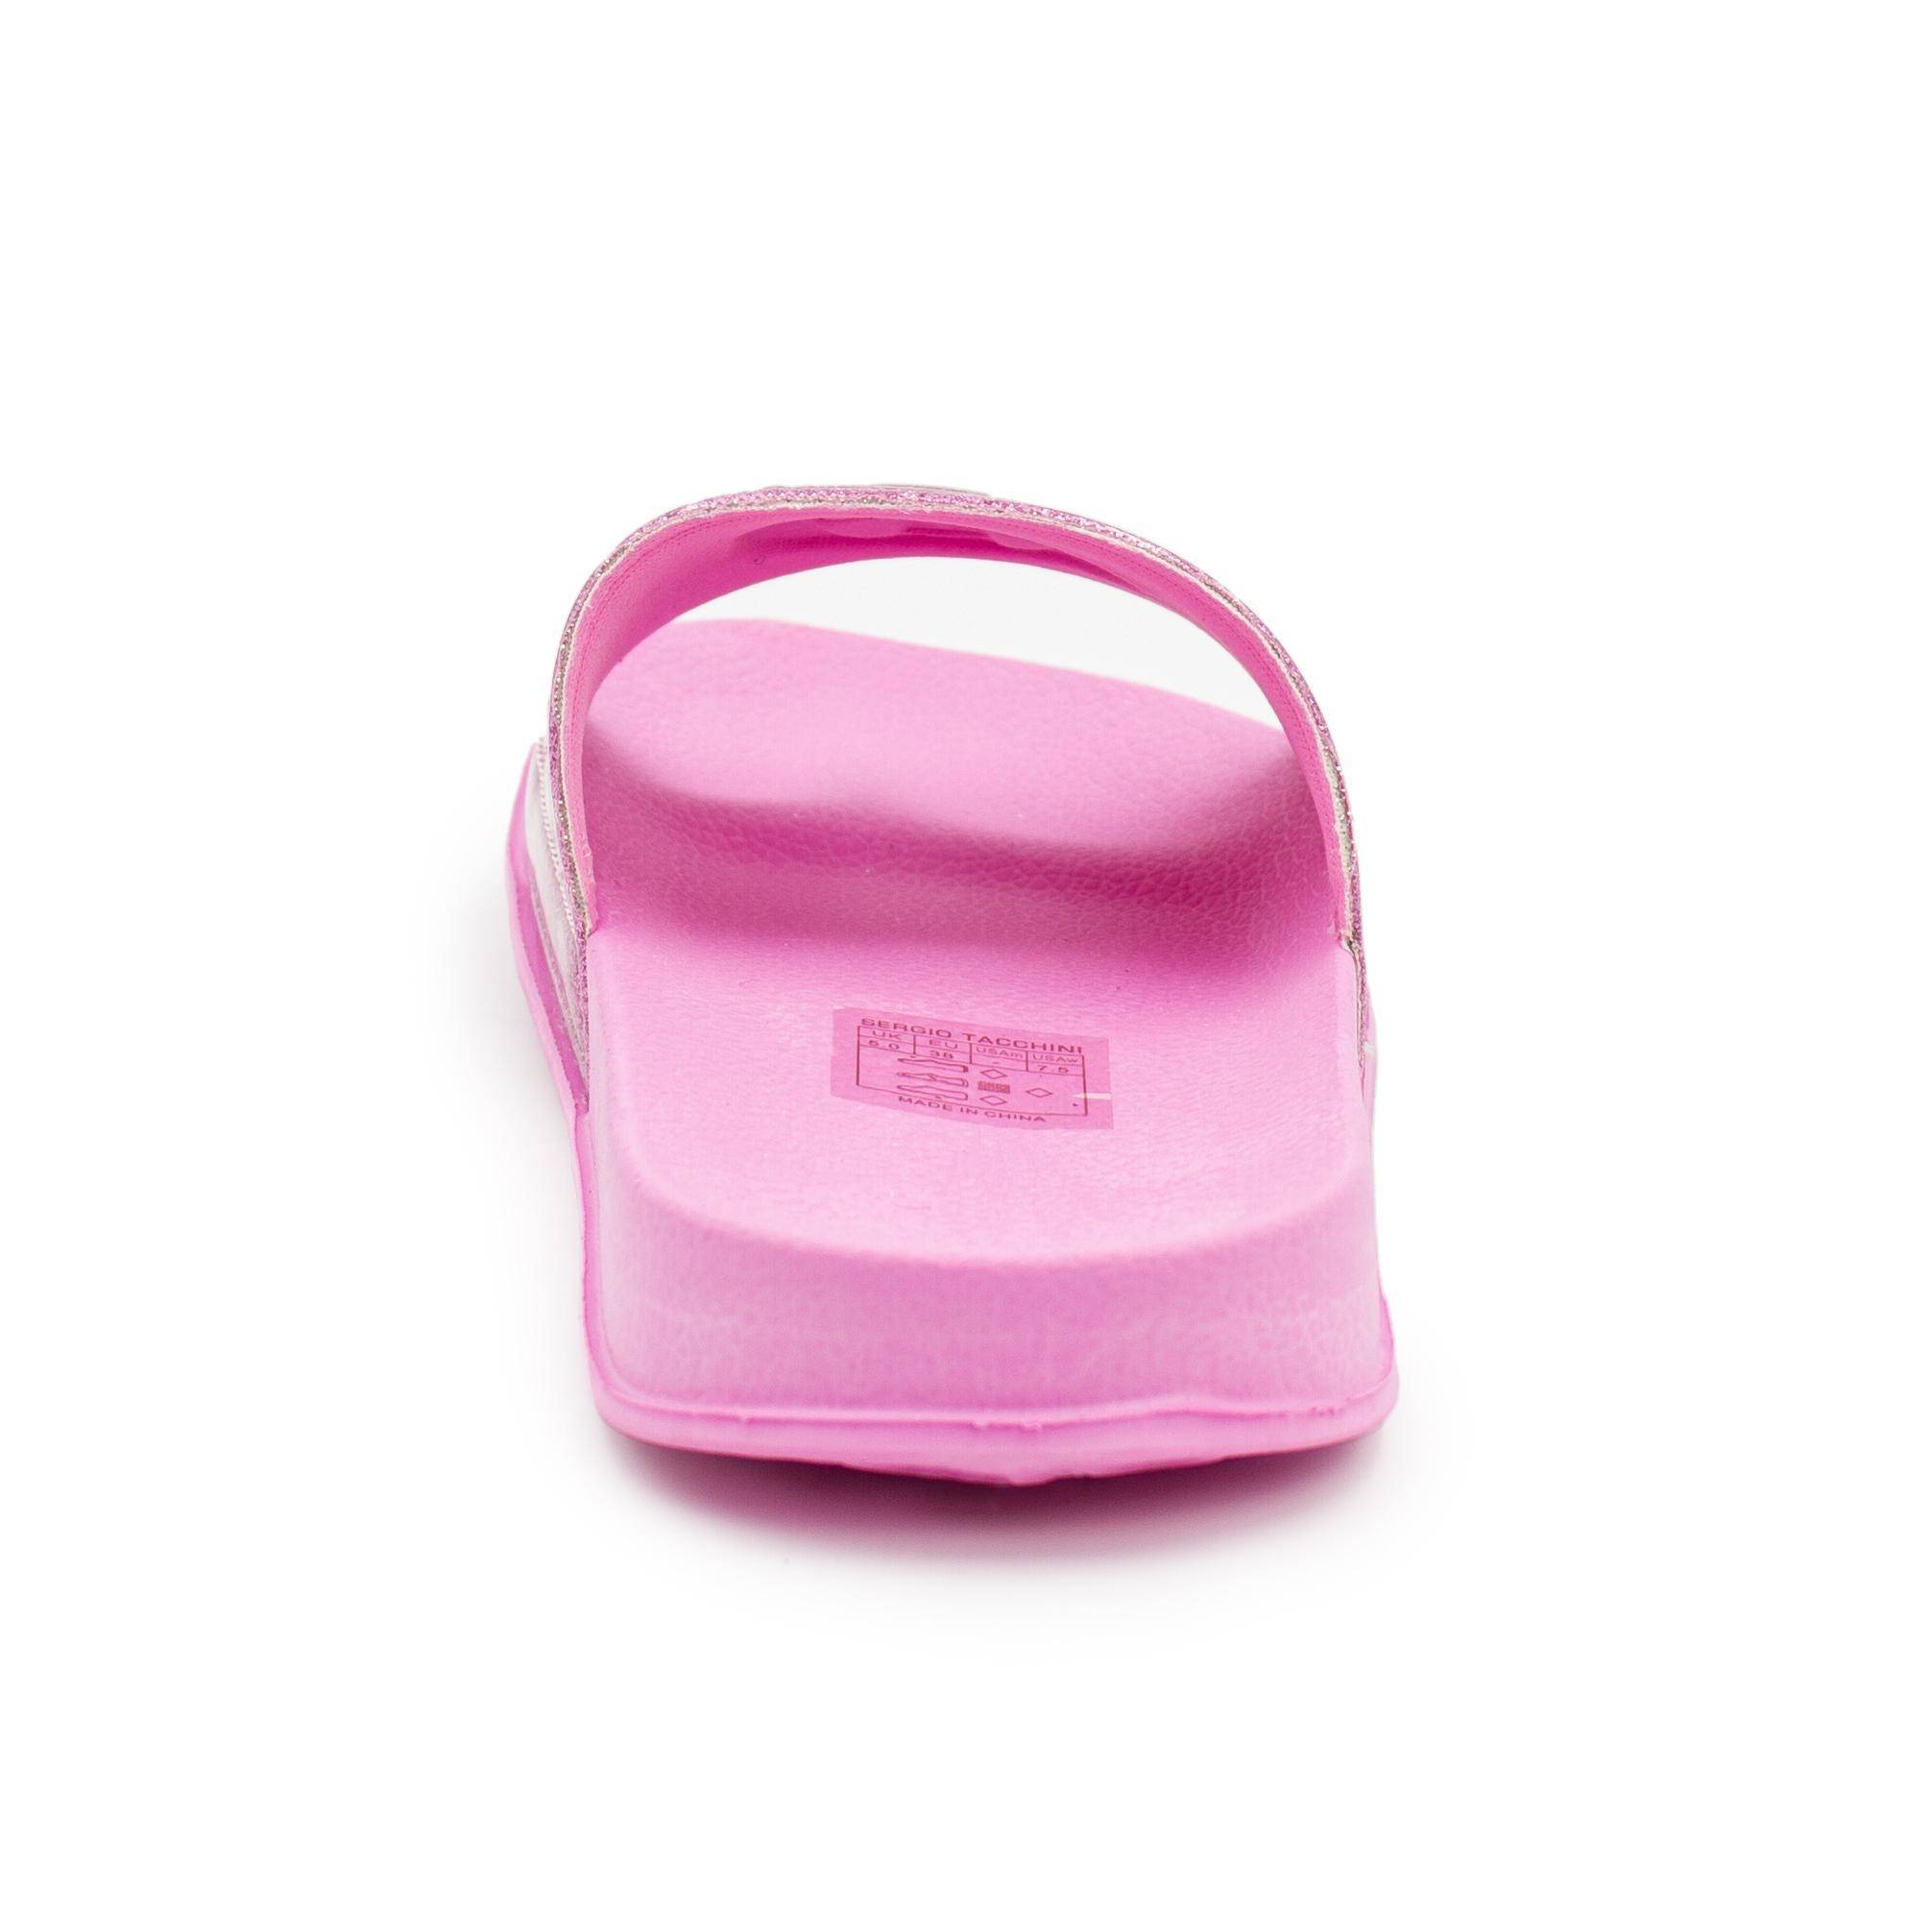 Женские сланцы Sergio Tacchini (REMIX GLITTER STW219006), розовые, цвет розовый, размер 40 - фото 4